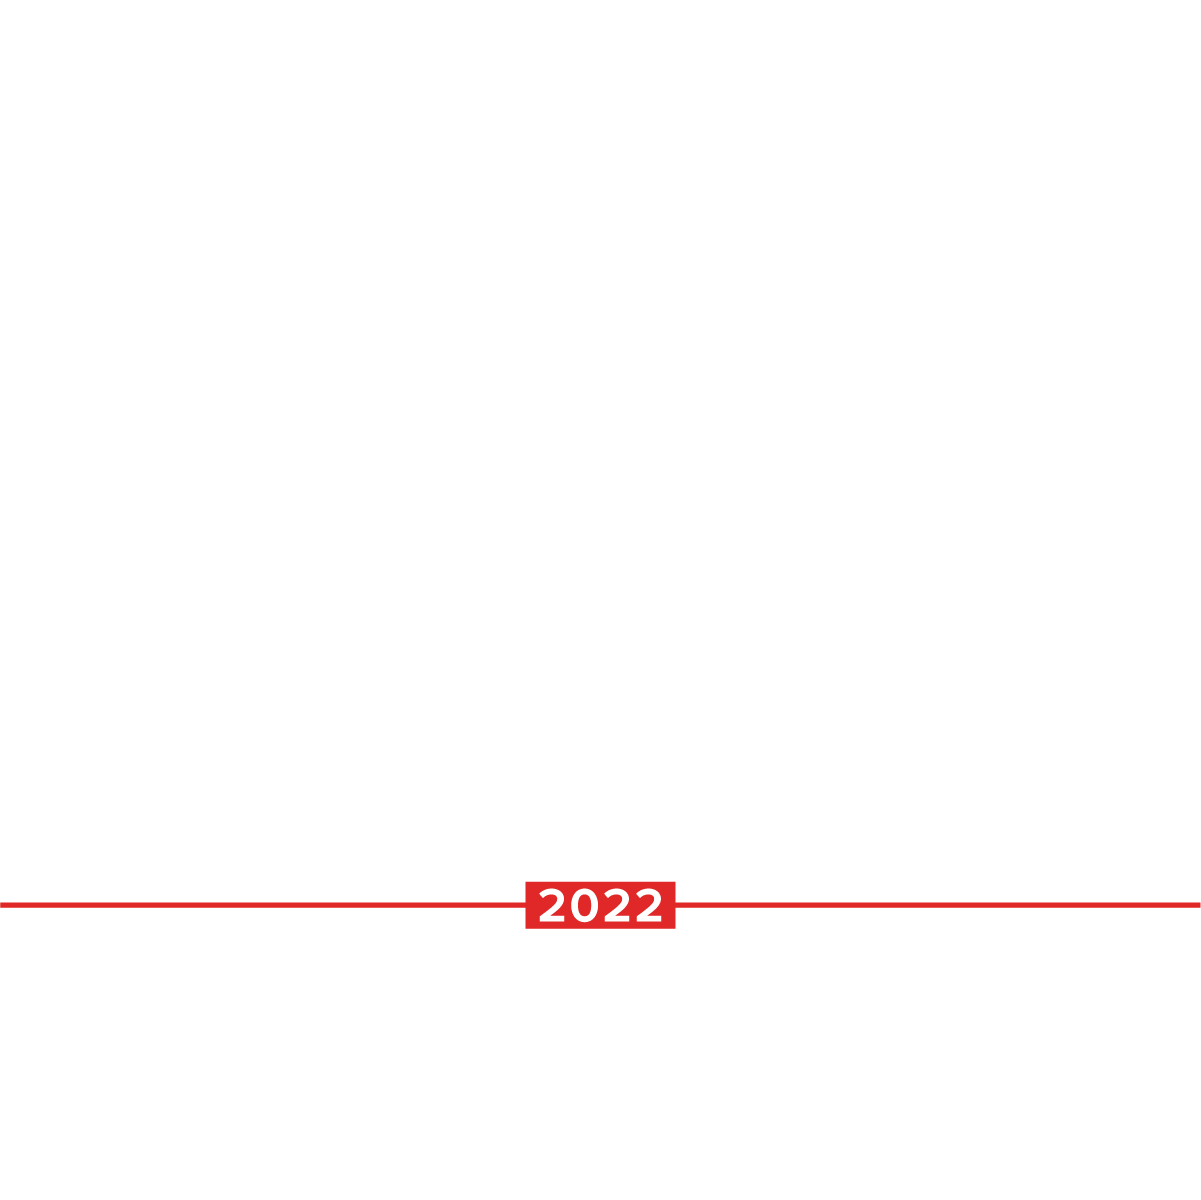 Home Association Of Defense Communities